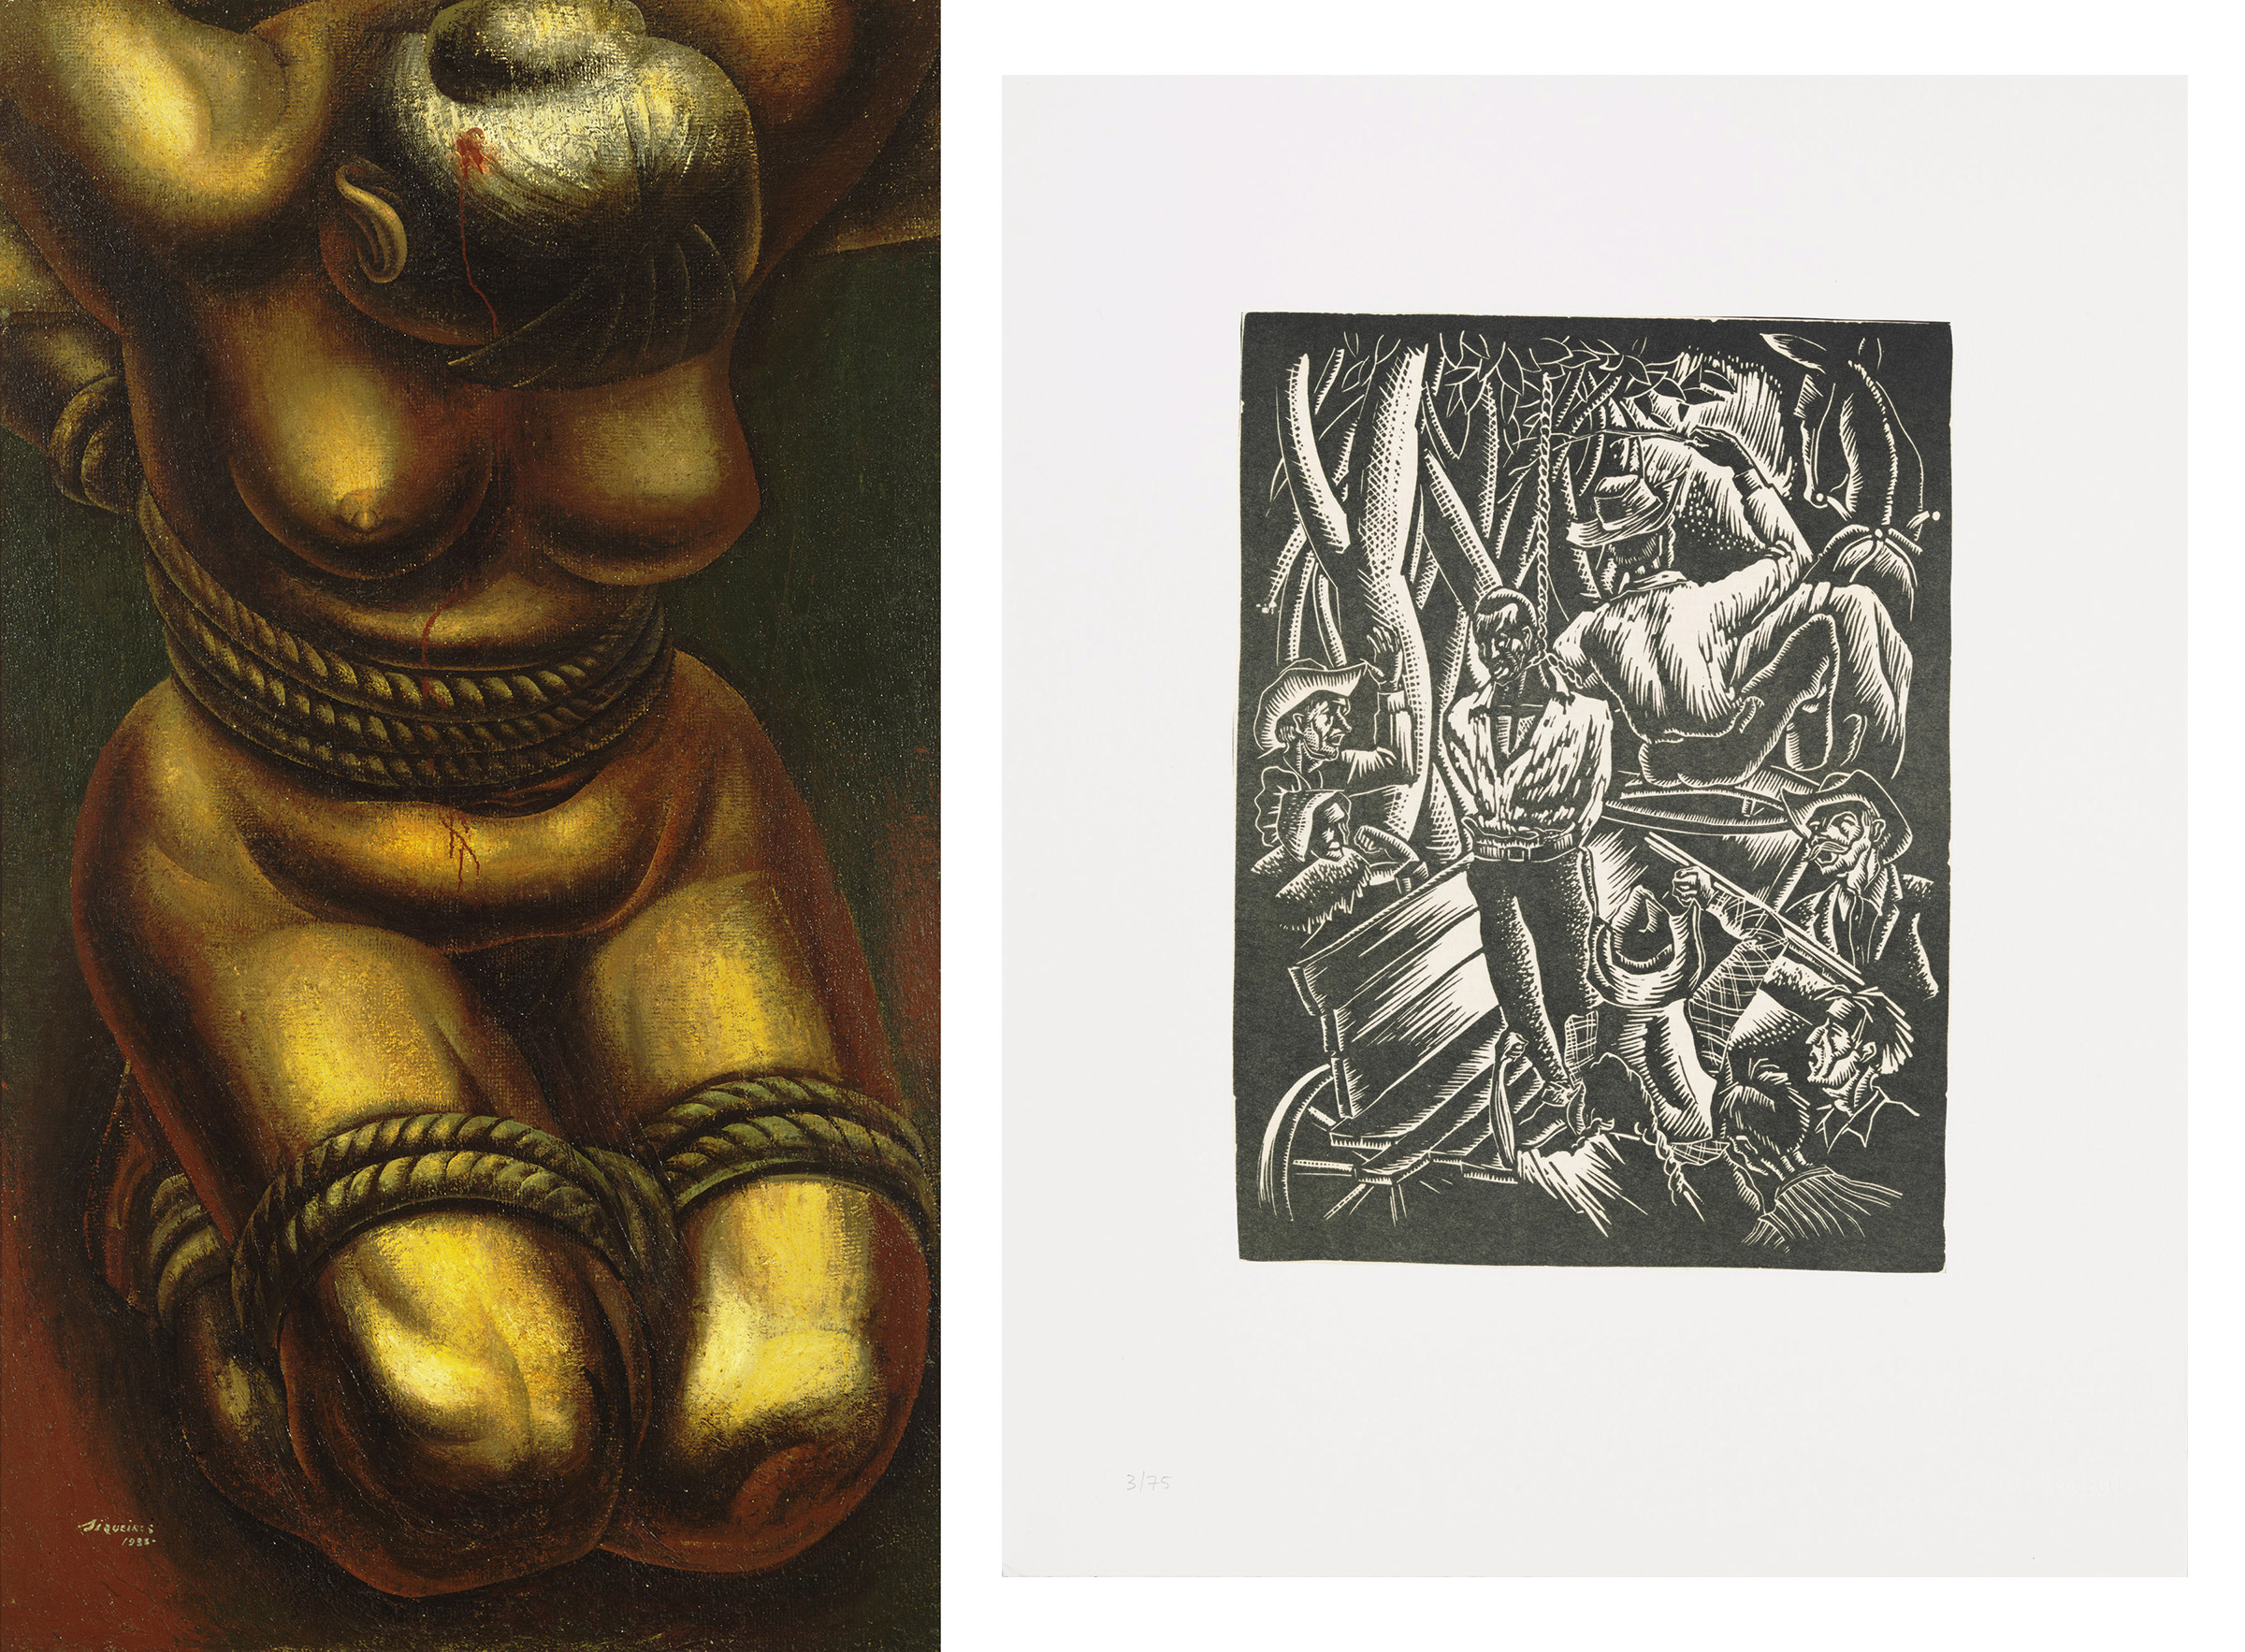 Left: David Alfaro Siqueiros, Proletarian Victim, 1933; Right: Hale Woodruff, Giddap, 1935 (printed 1996)